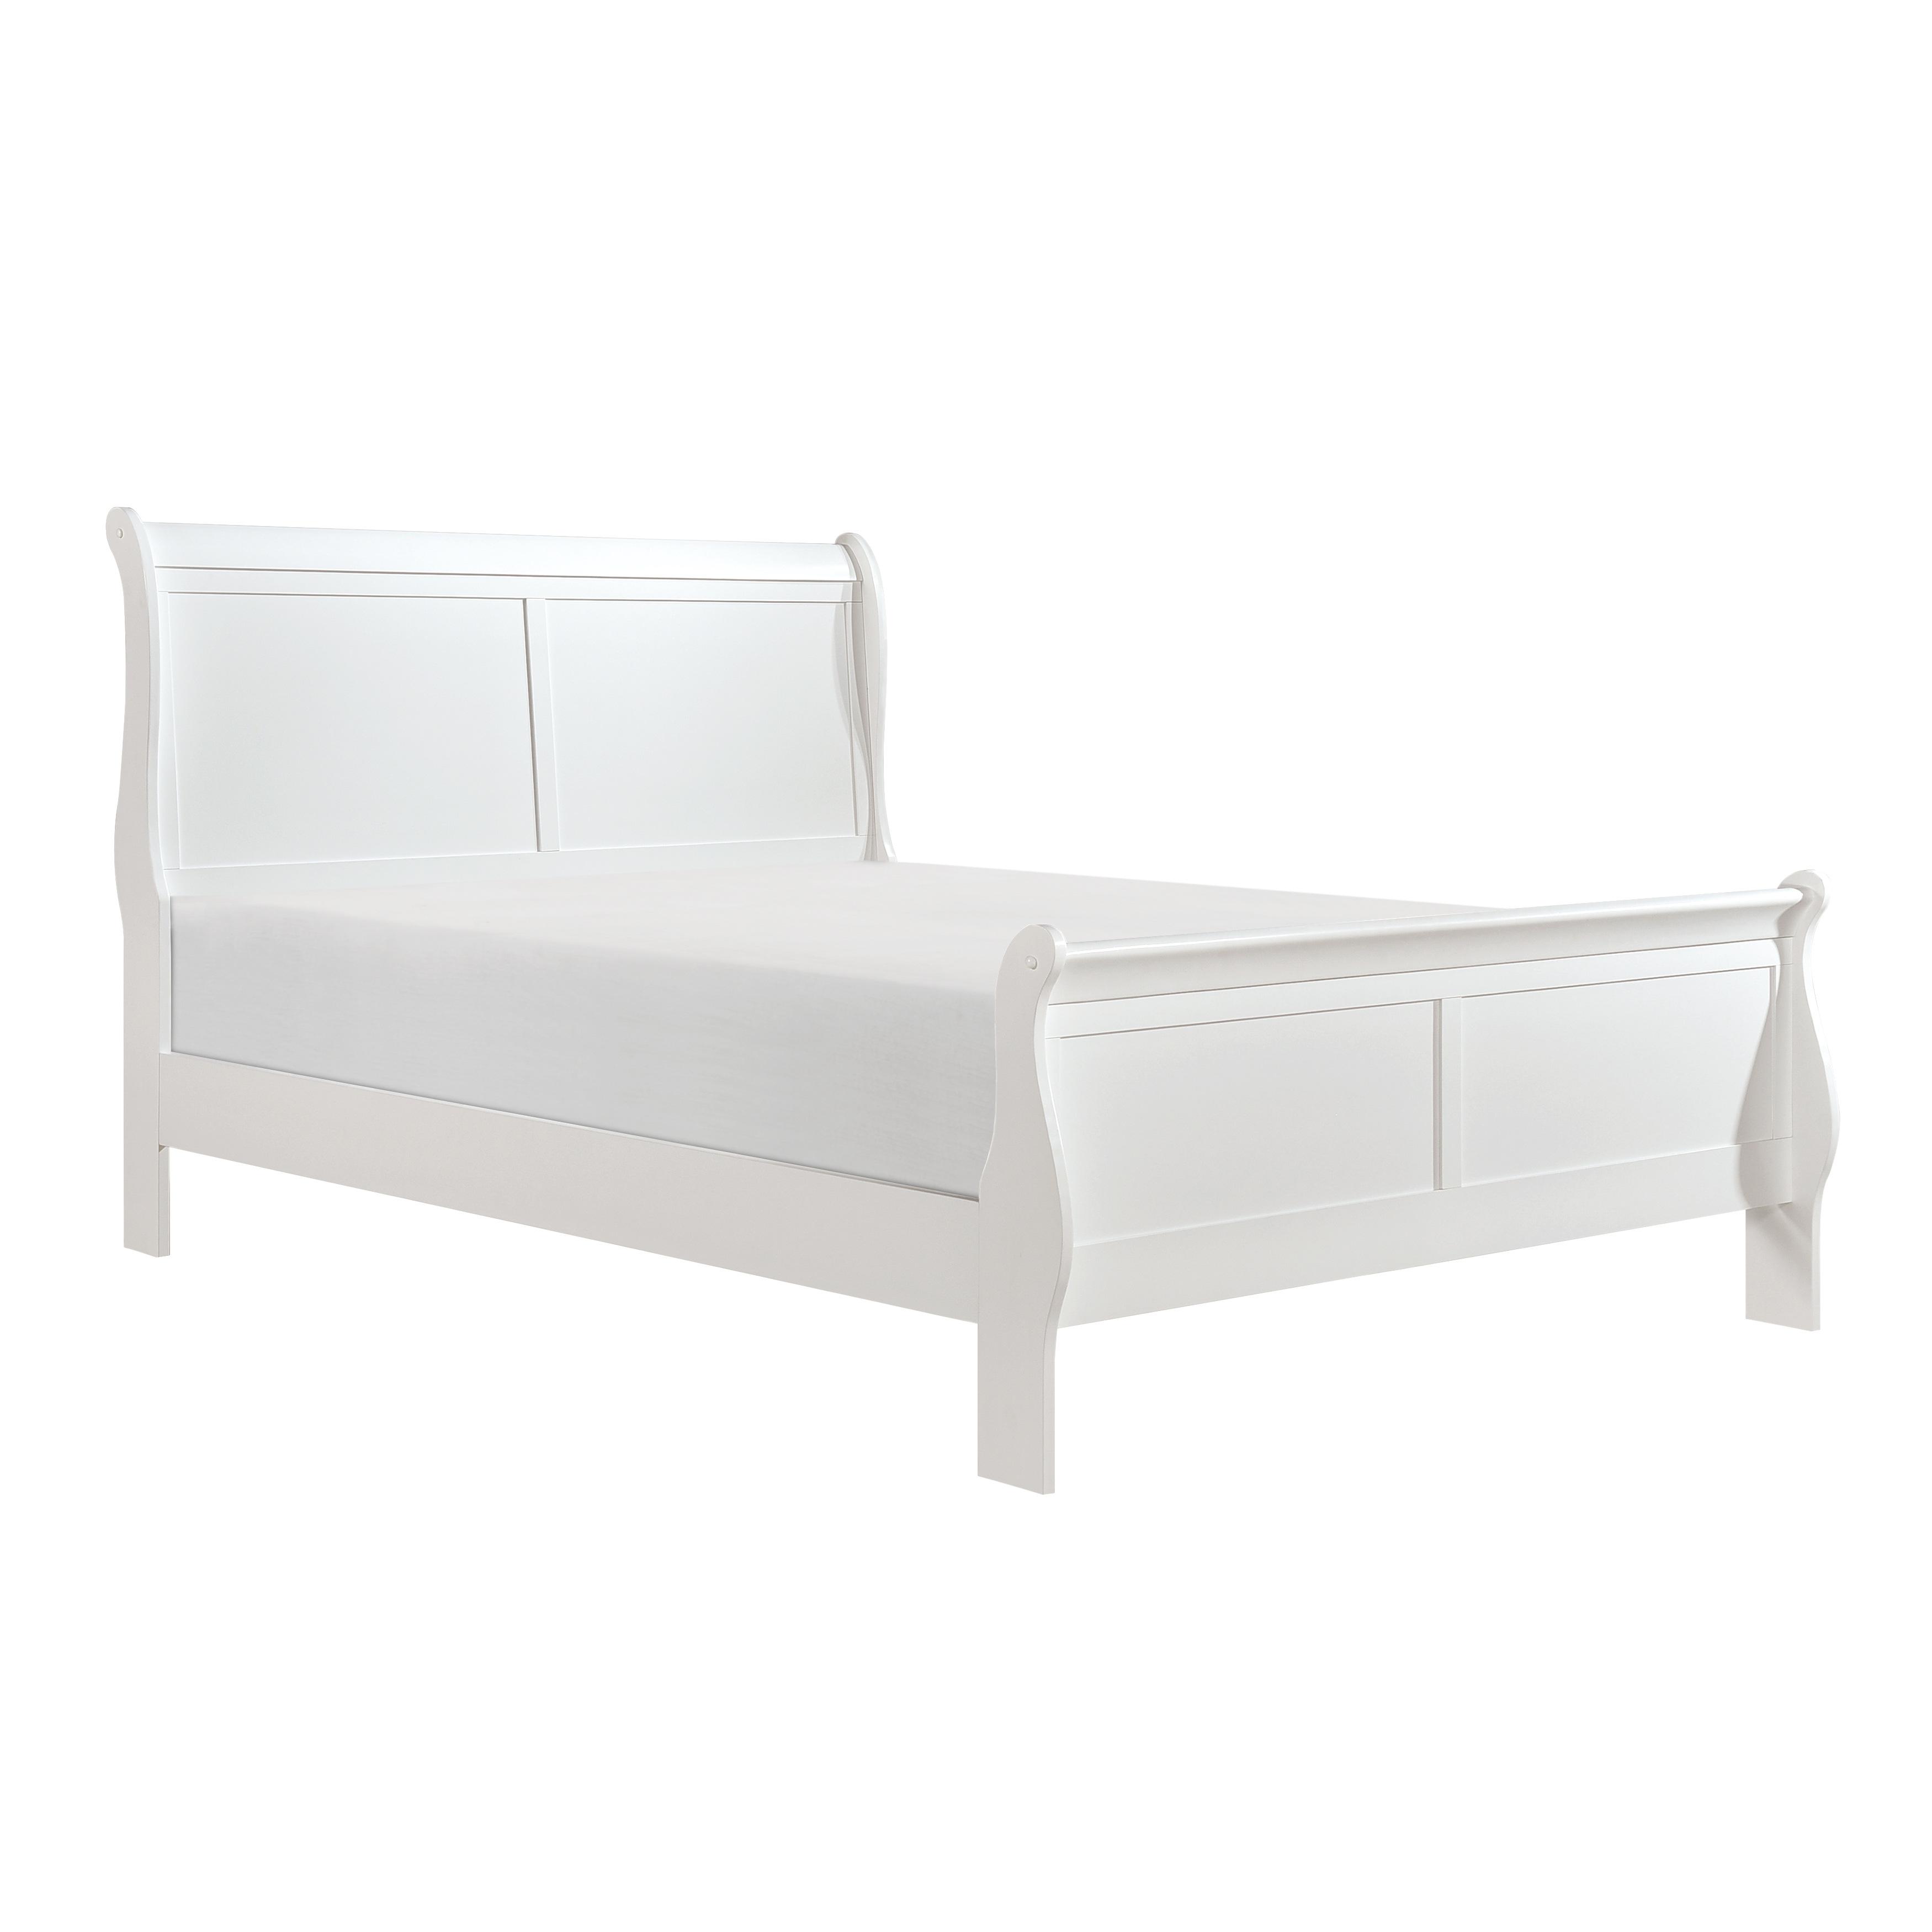 Traditional Bed 2147KW-1EK* Mayville 2147KW-1EK* in White 